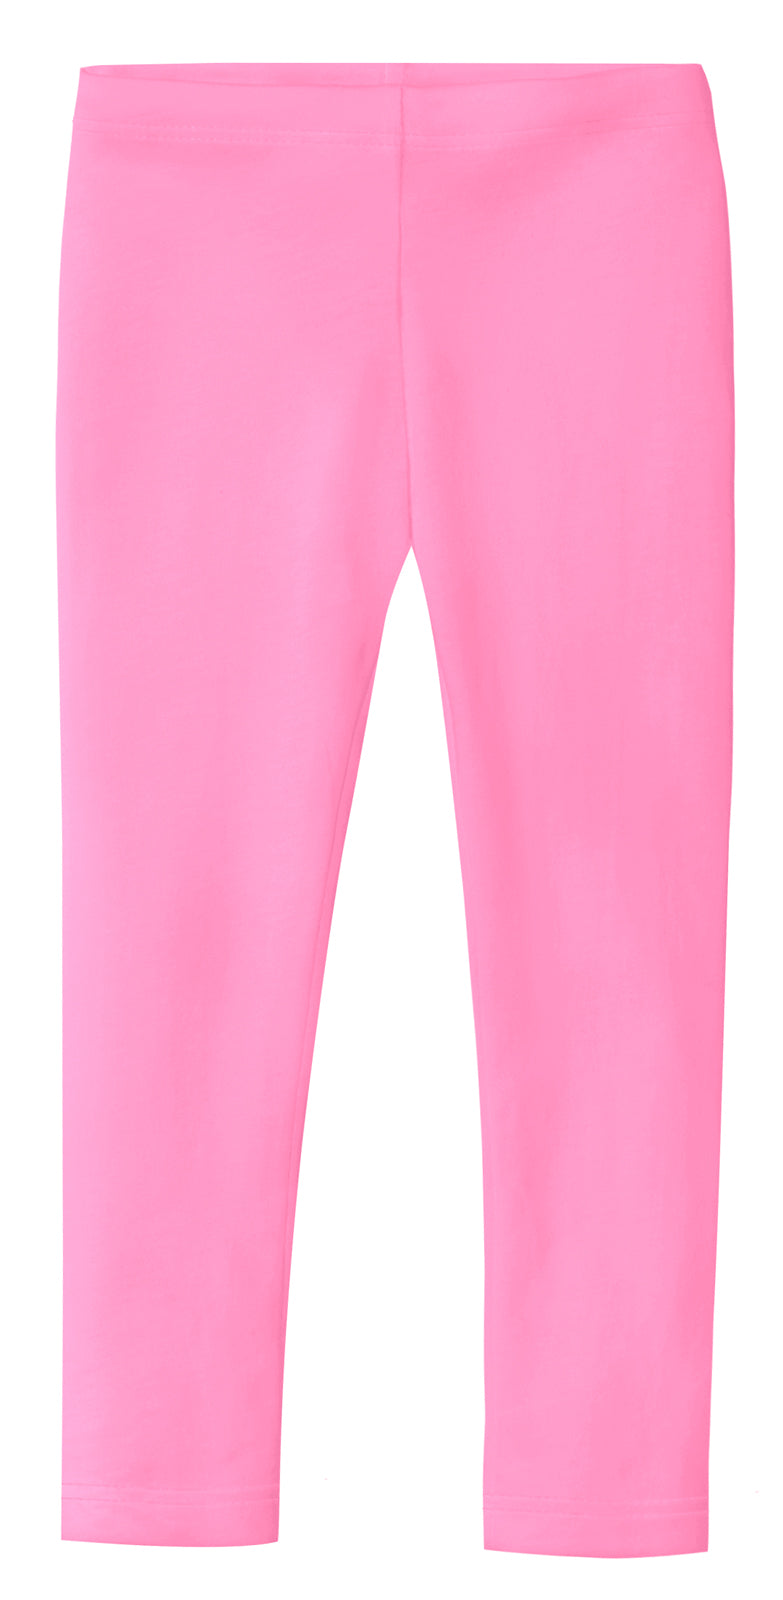 Solid Color Cotton Lycra Leggings in Pink : BKS64